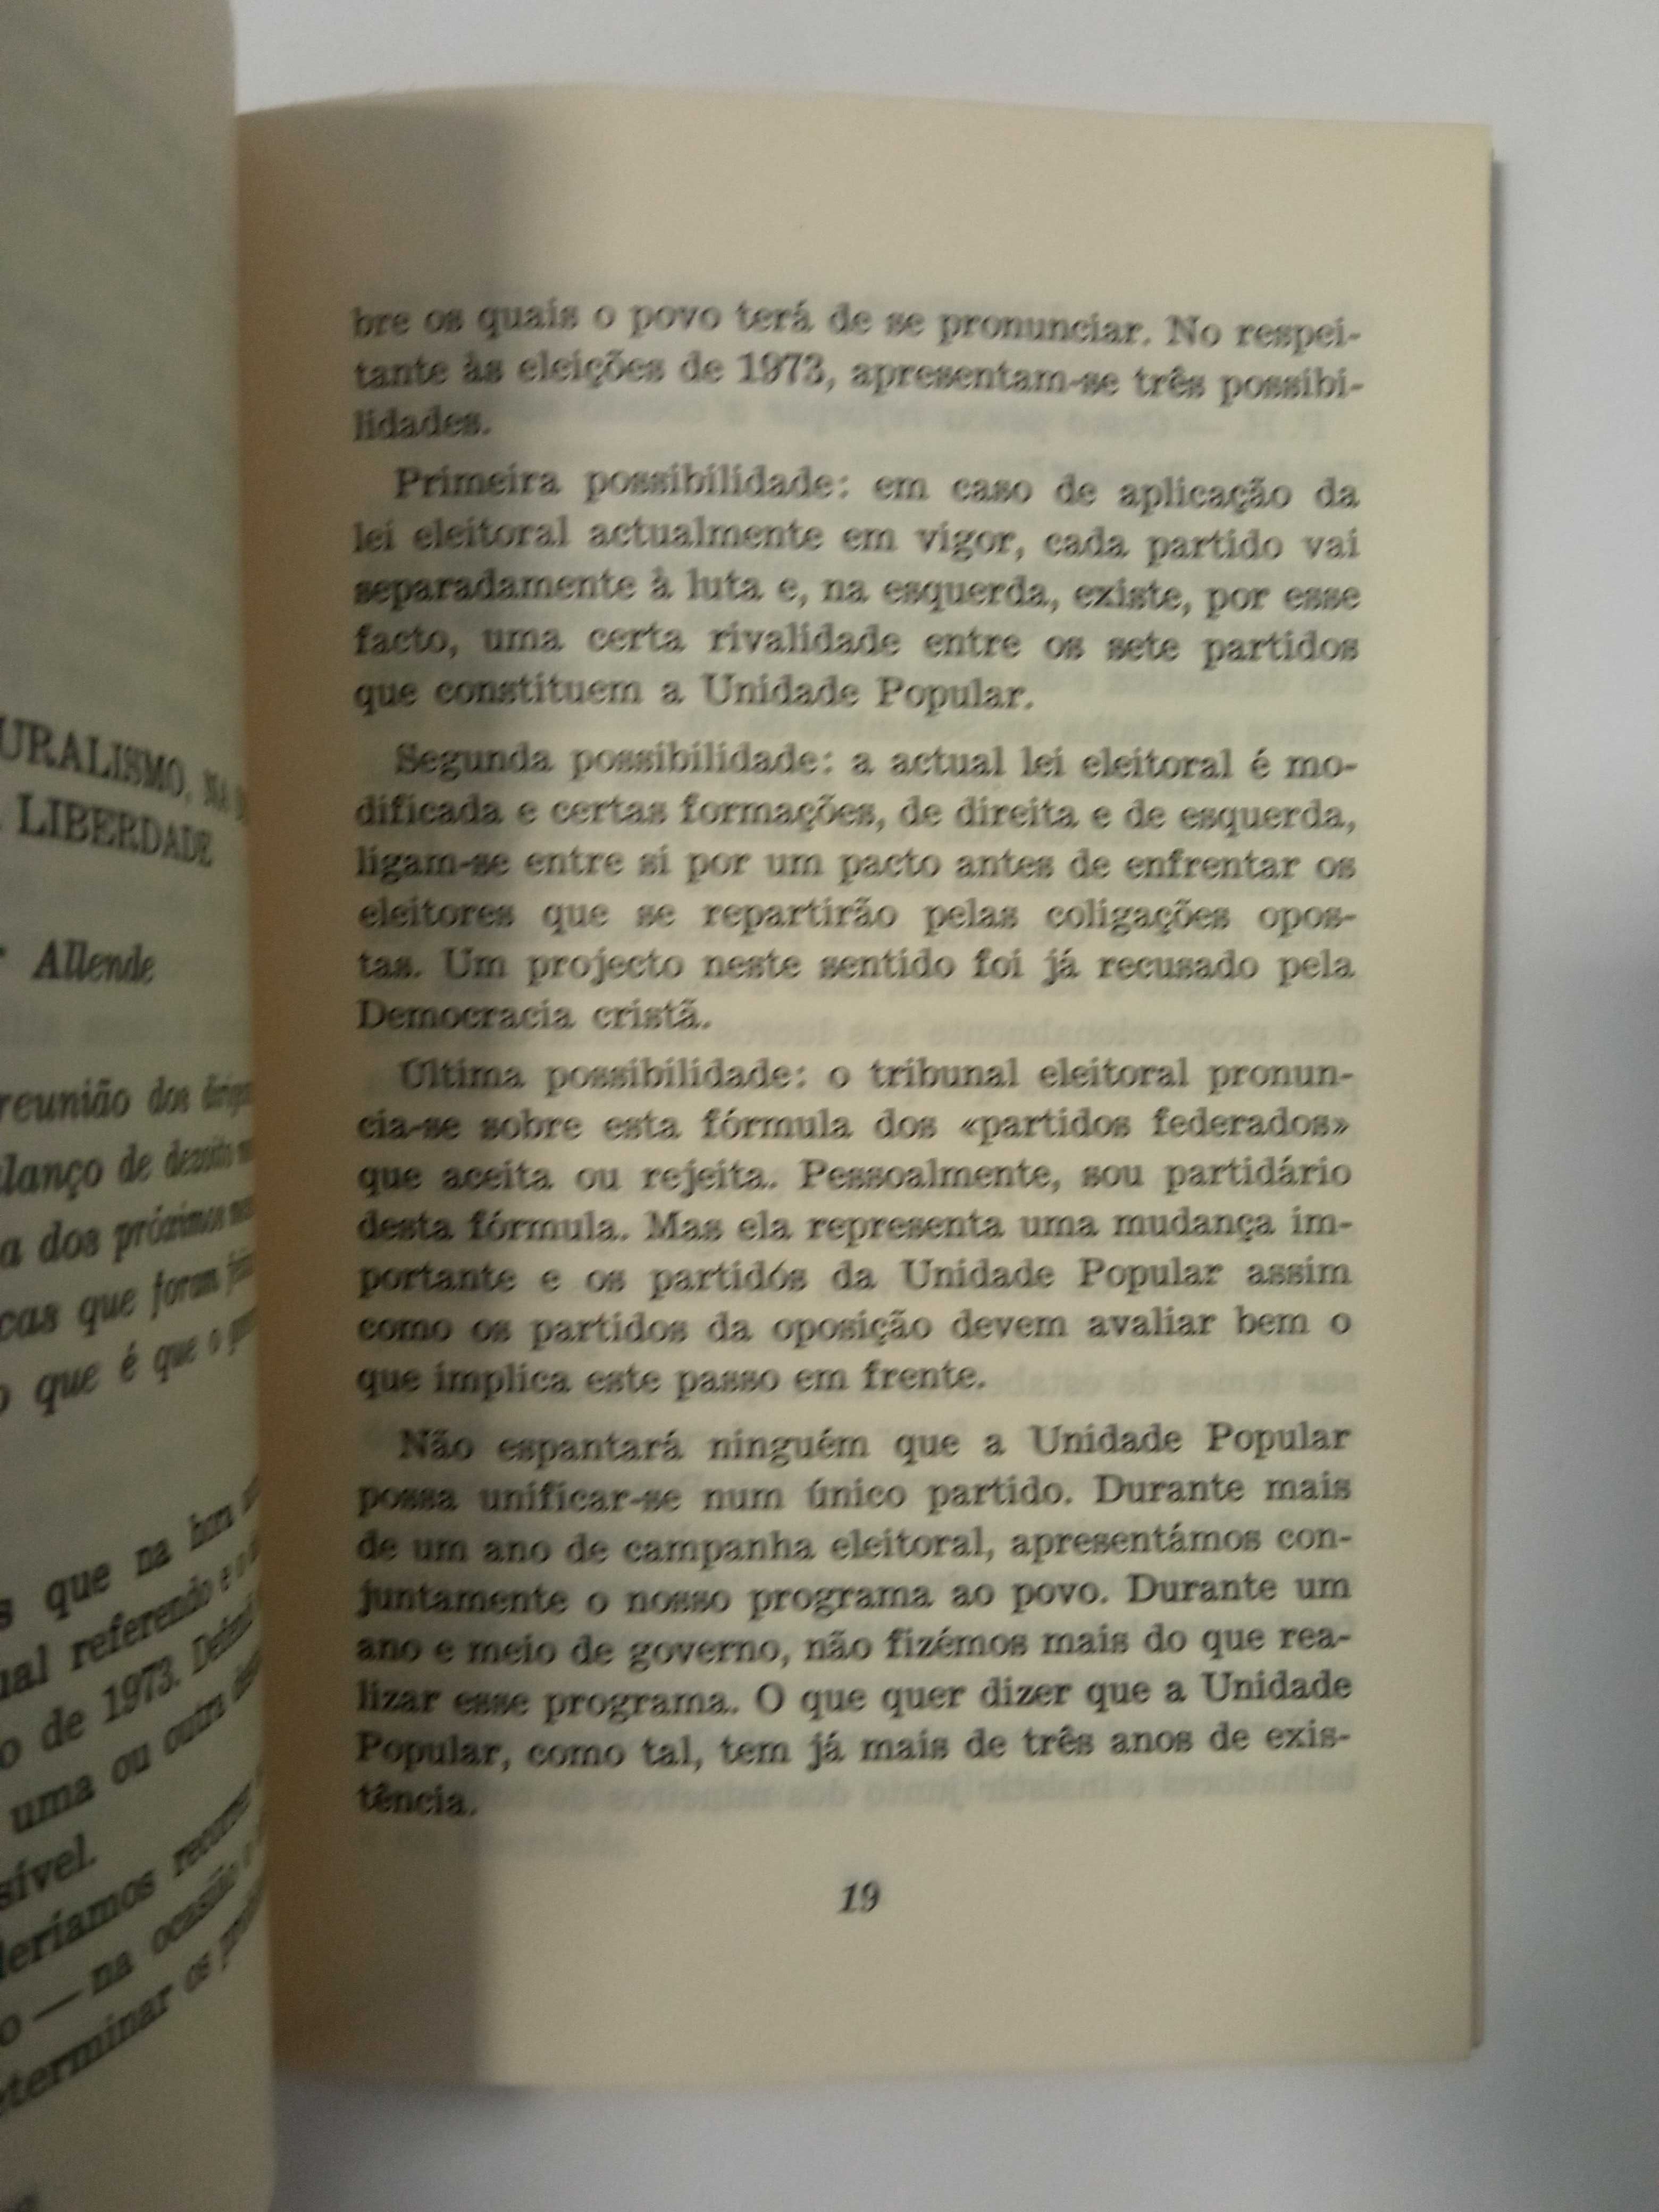 O Dilema Chileno, de Teitelbaum, Cademartori, S. Allende...